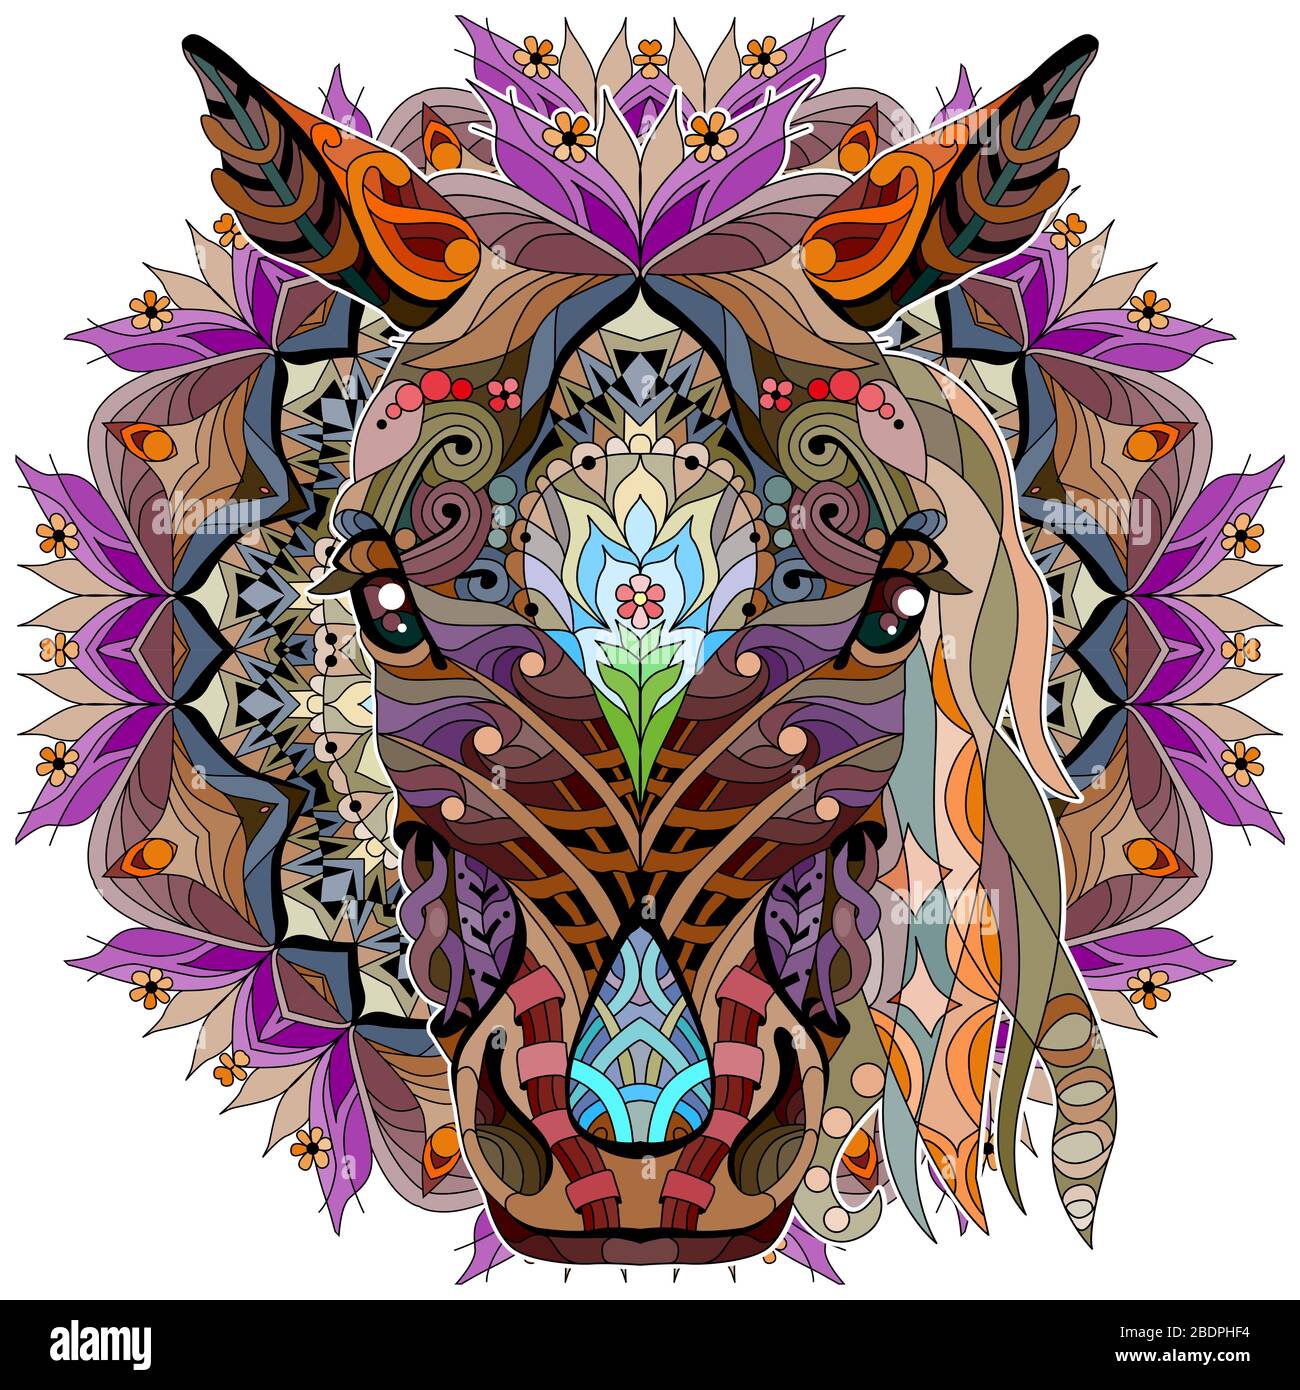 Zentangle horse head with mandala. Hand drawn decorative vector illustration. Stock Vector